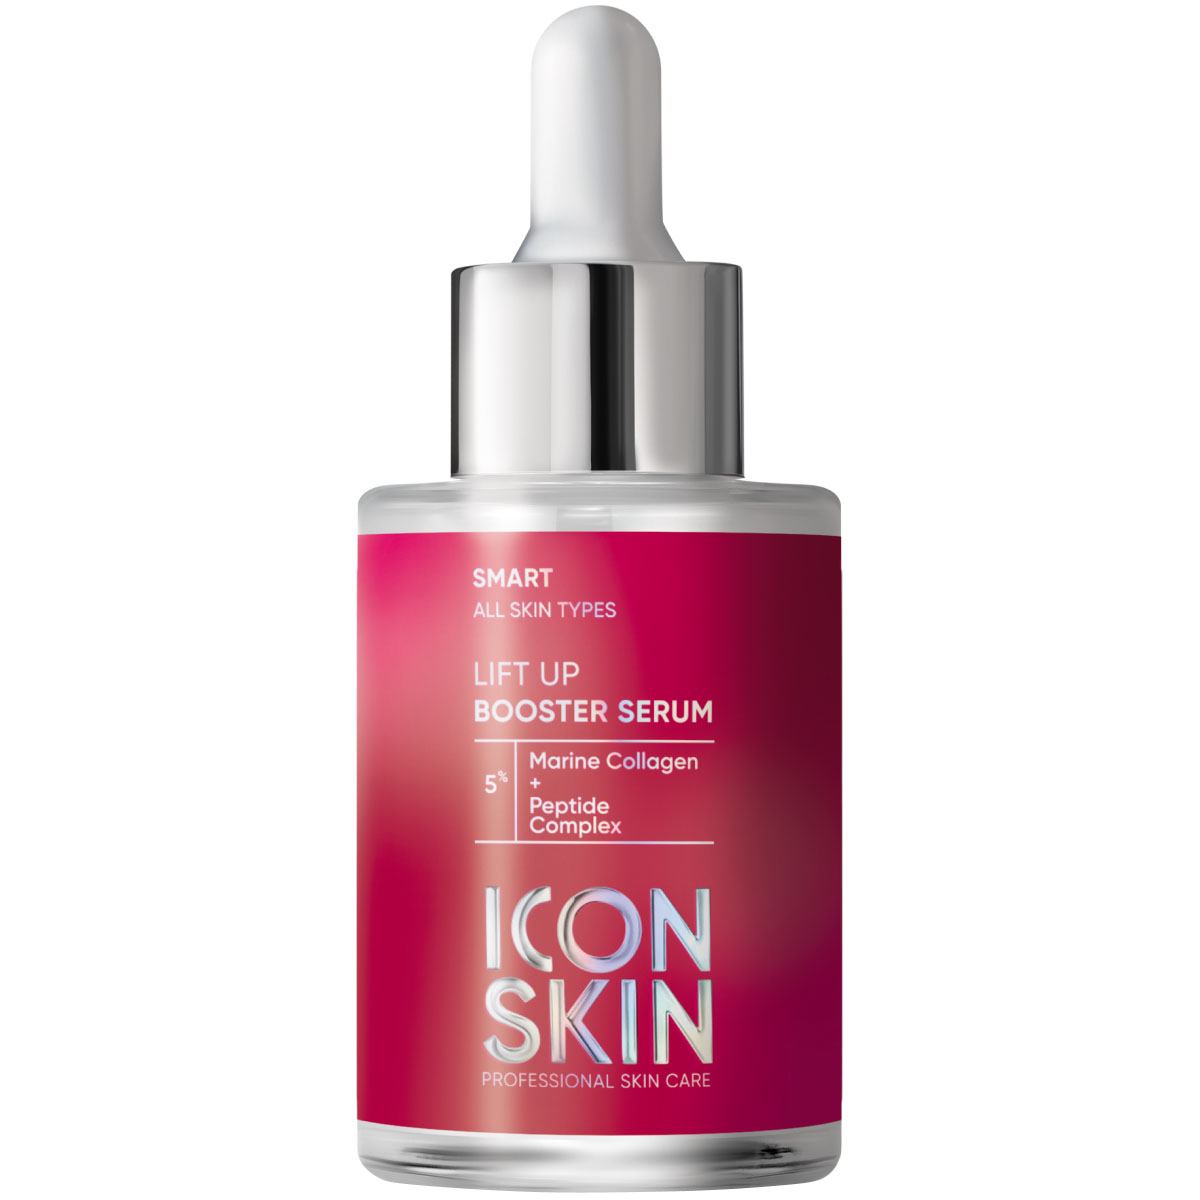 Icon Skin Антивозрастная сыворотка-концентрат Lift Up с коллагеном, 30 мл (Icon Skin, Smart) антивозрастная сыворотка концентрат для лица icon skin lift up booster serum 30 мл